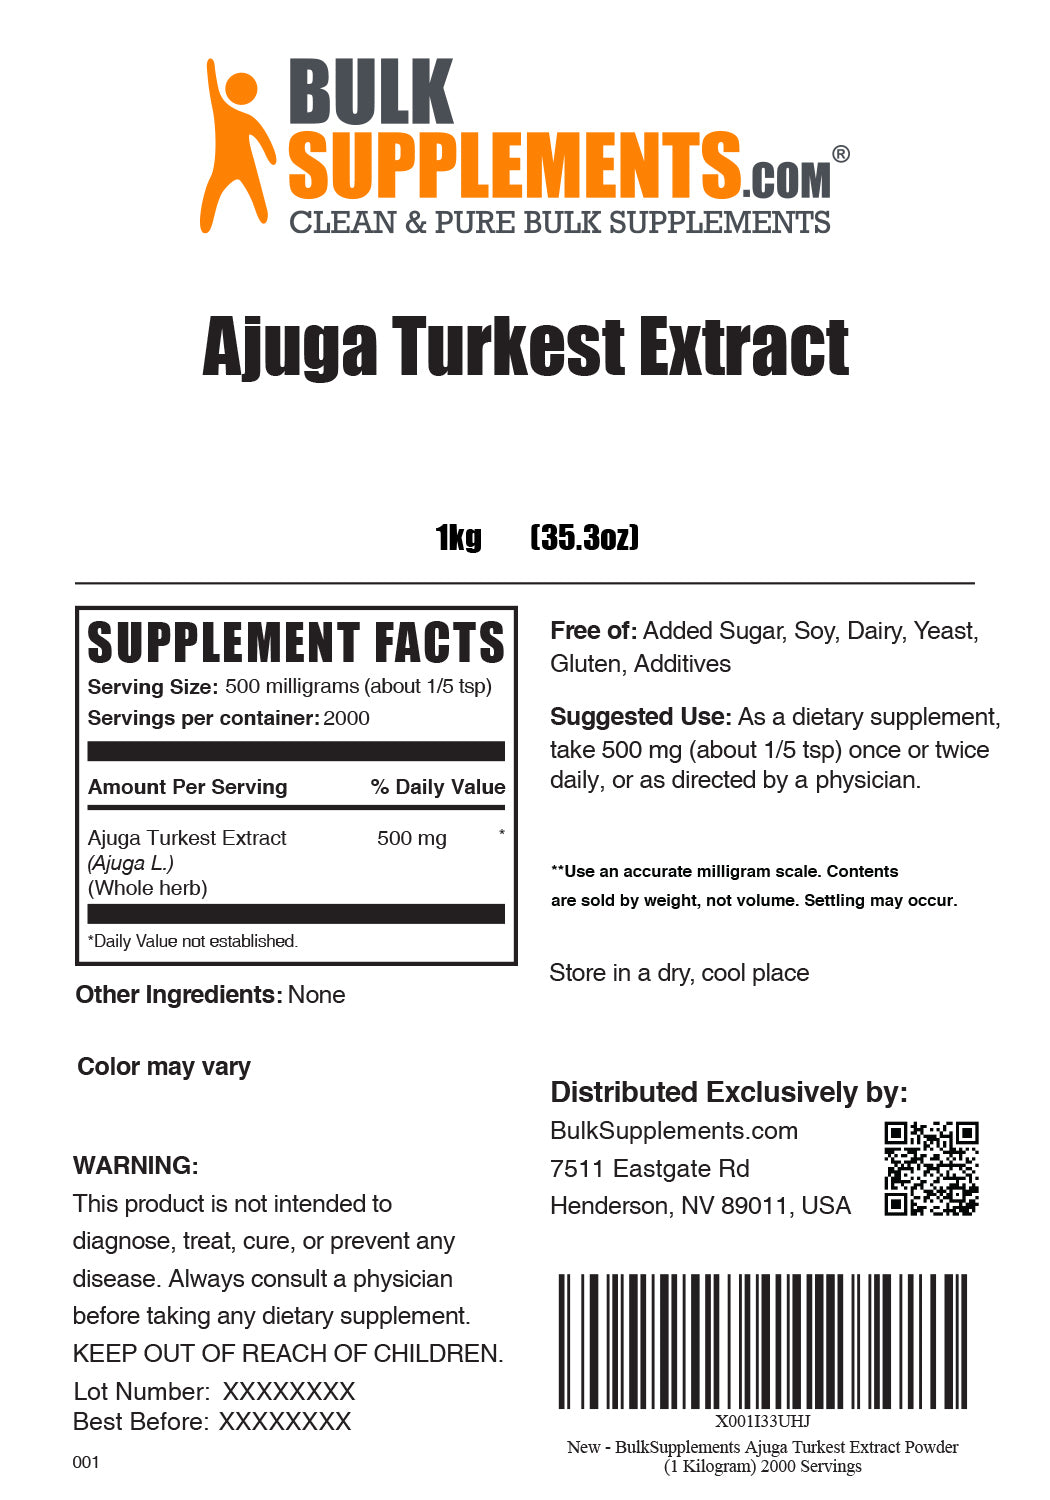 Ajuga Turkest Extract Supplement Facts, 1kg bag